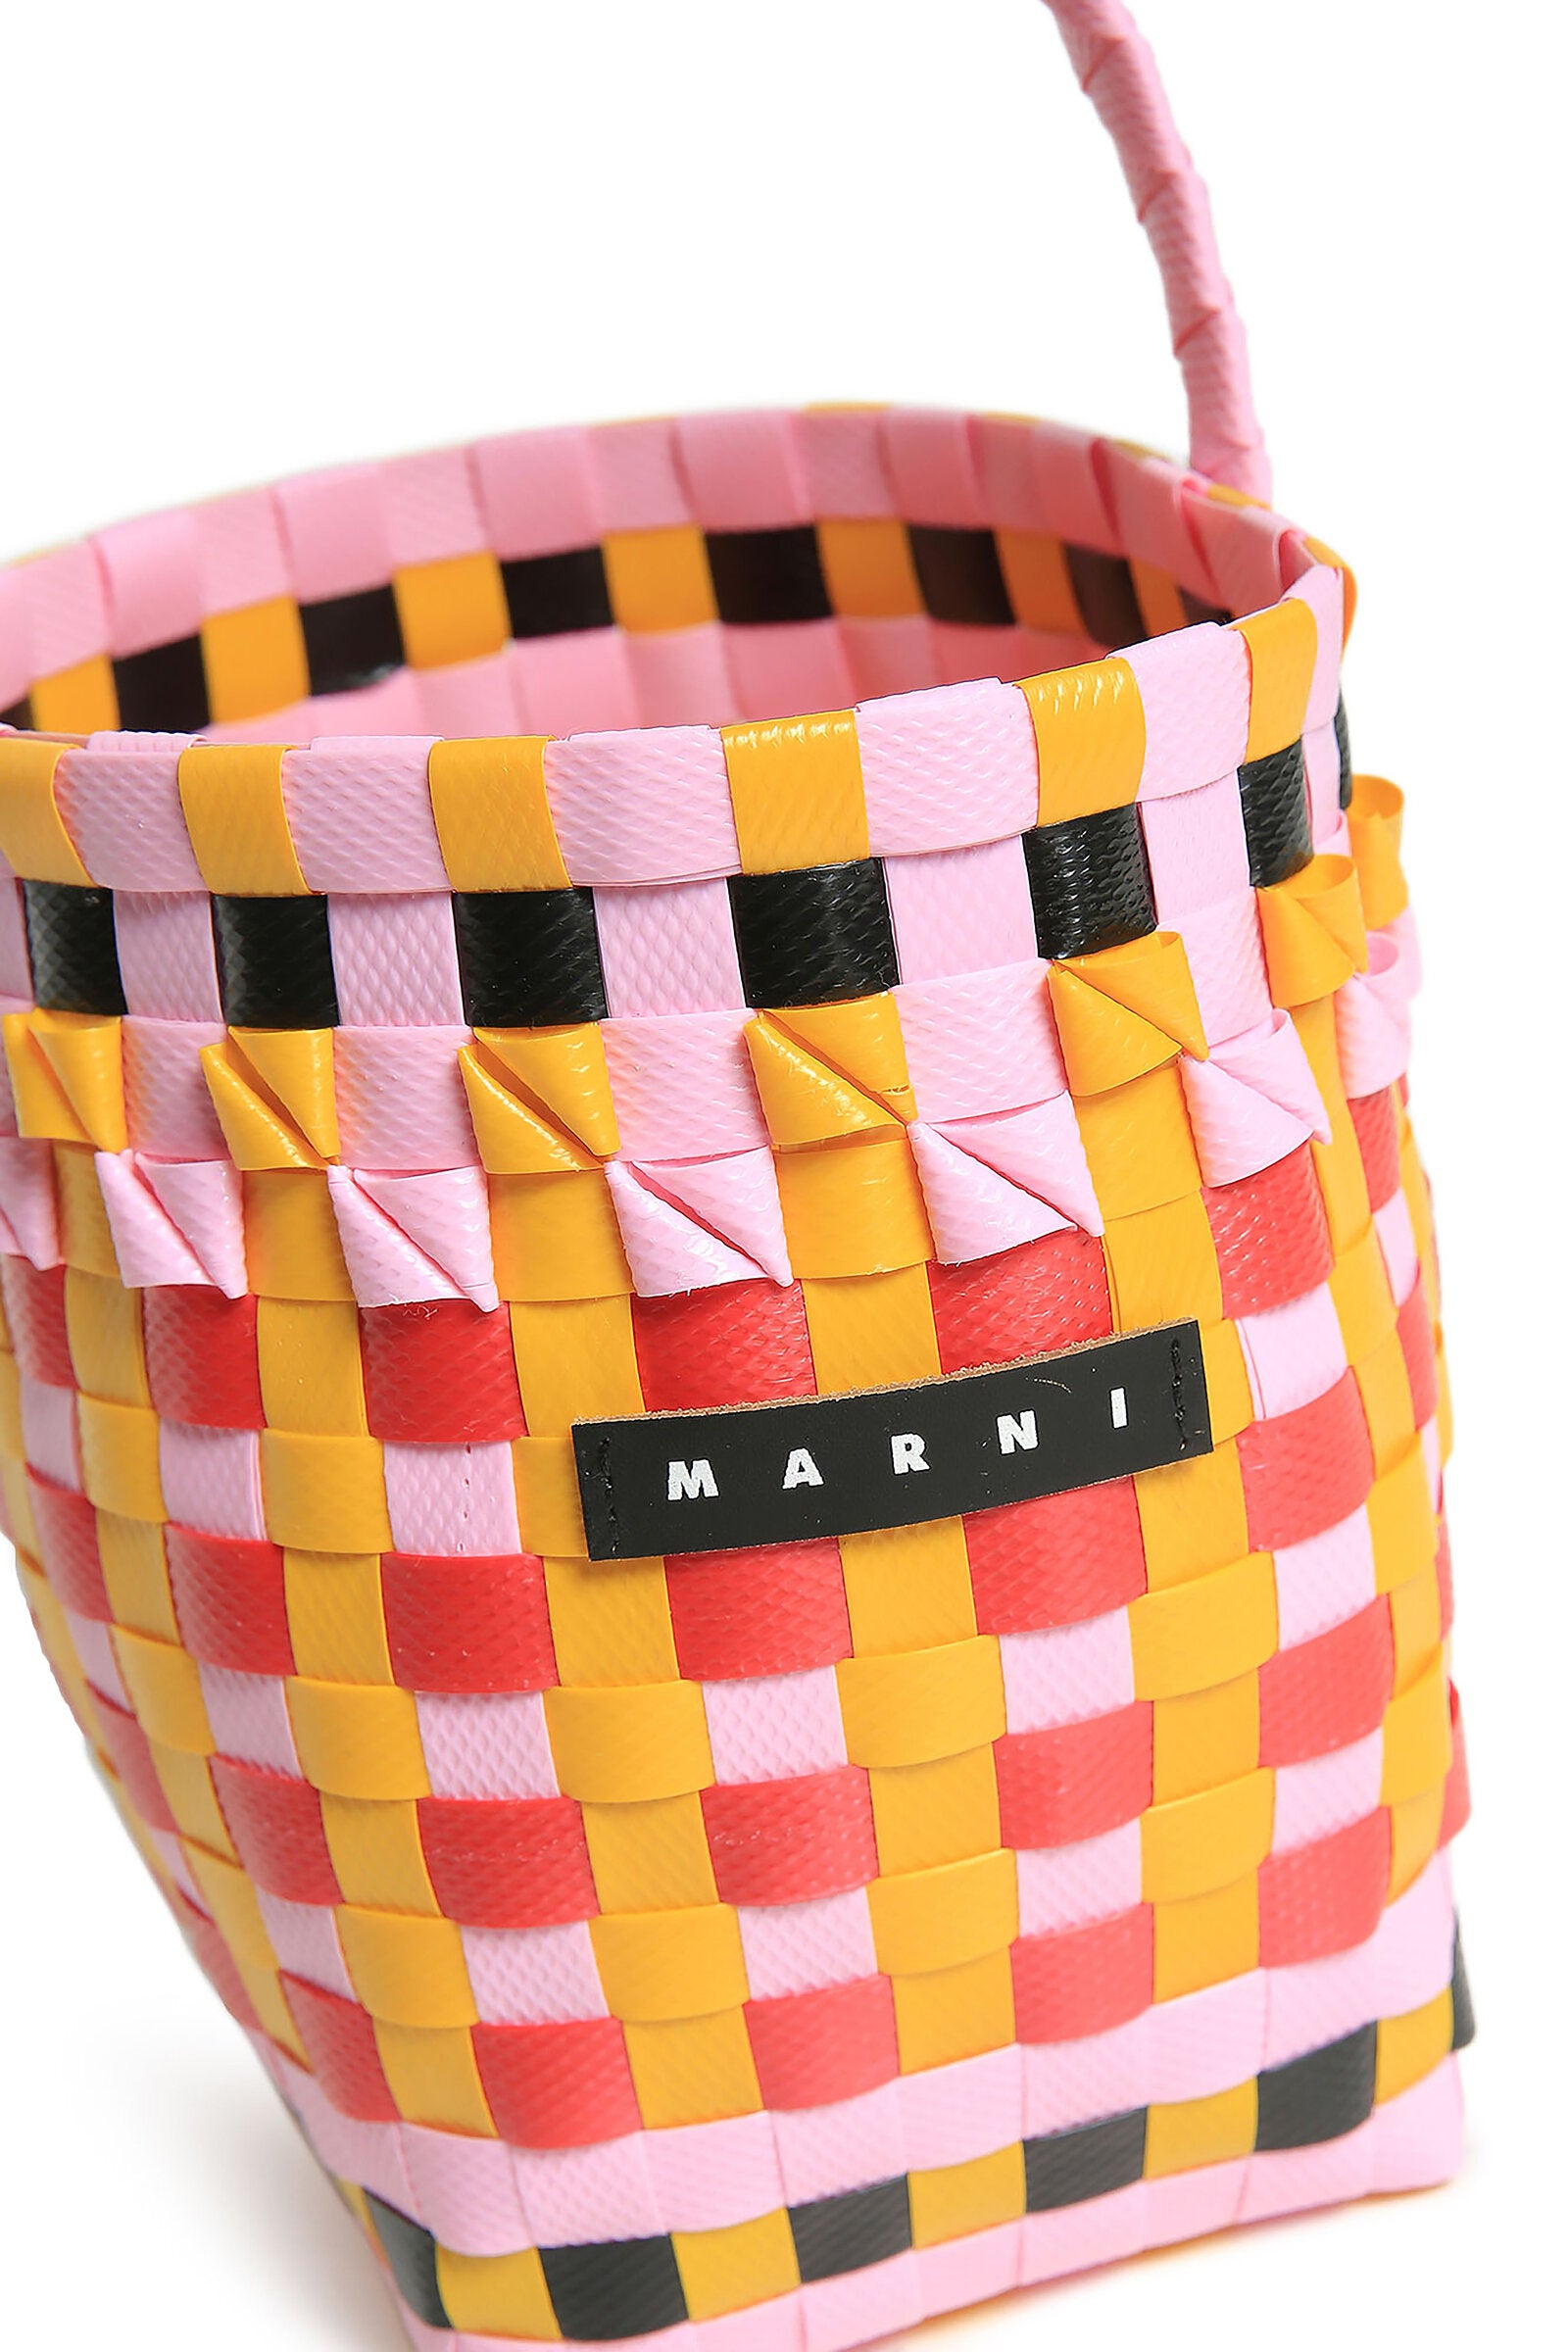 Marni pink woven pod bag with single handle and applied logo for